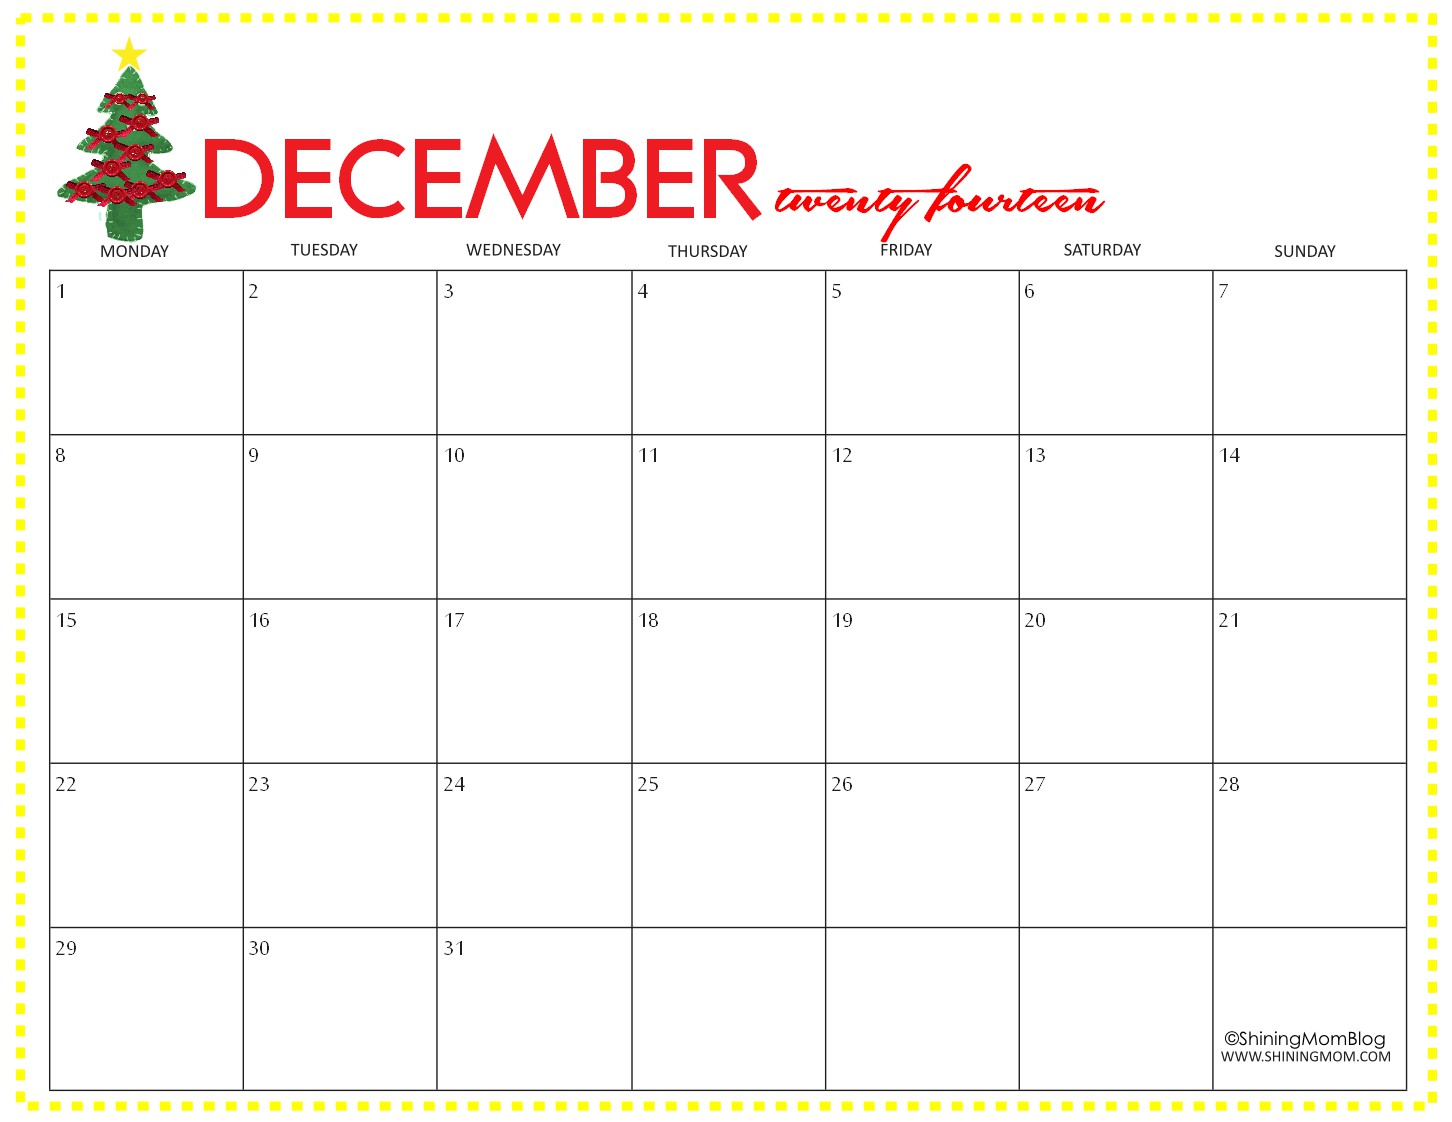 free printable december 2014 calendar by shining mom